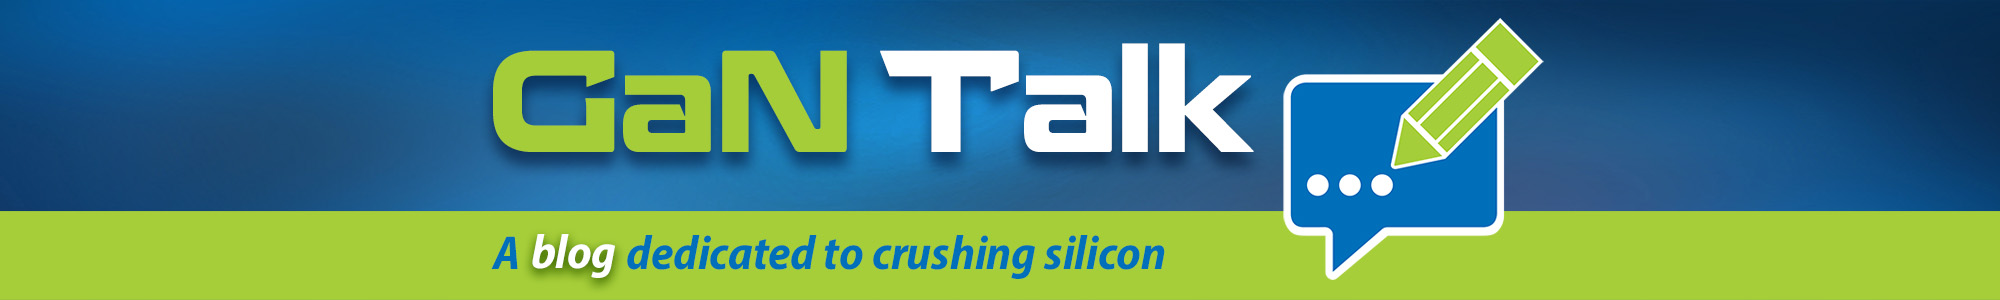 GaN Talk a blog dedicated to crushing silicon